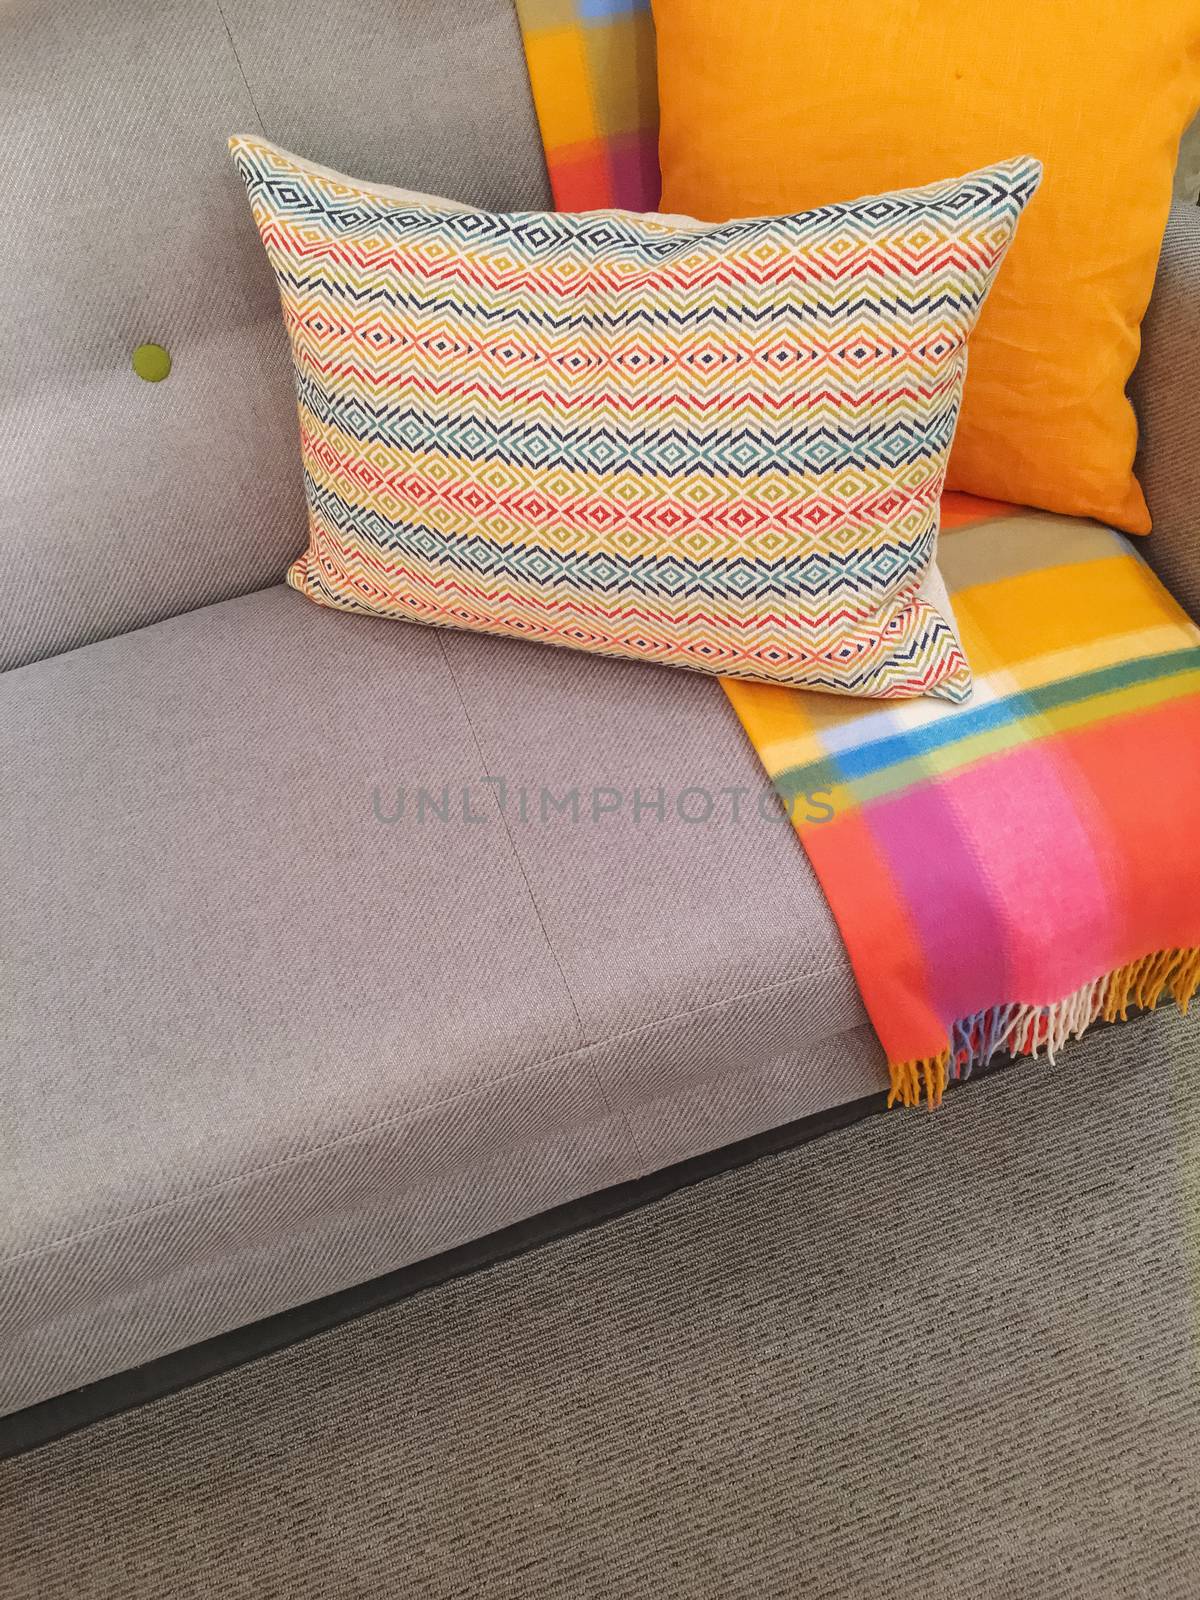 Sofa and cushions in gray and orange tones by anikasalsera